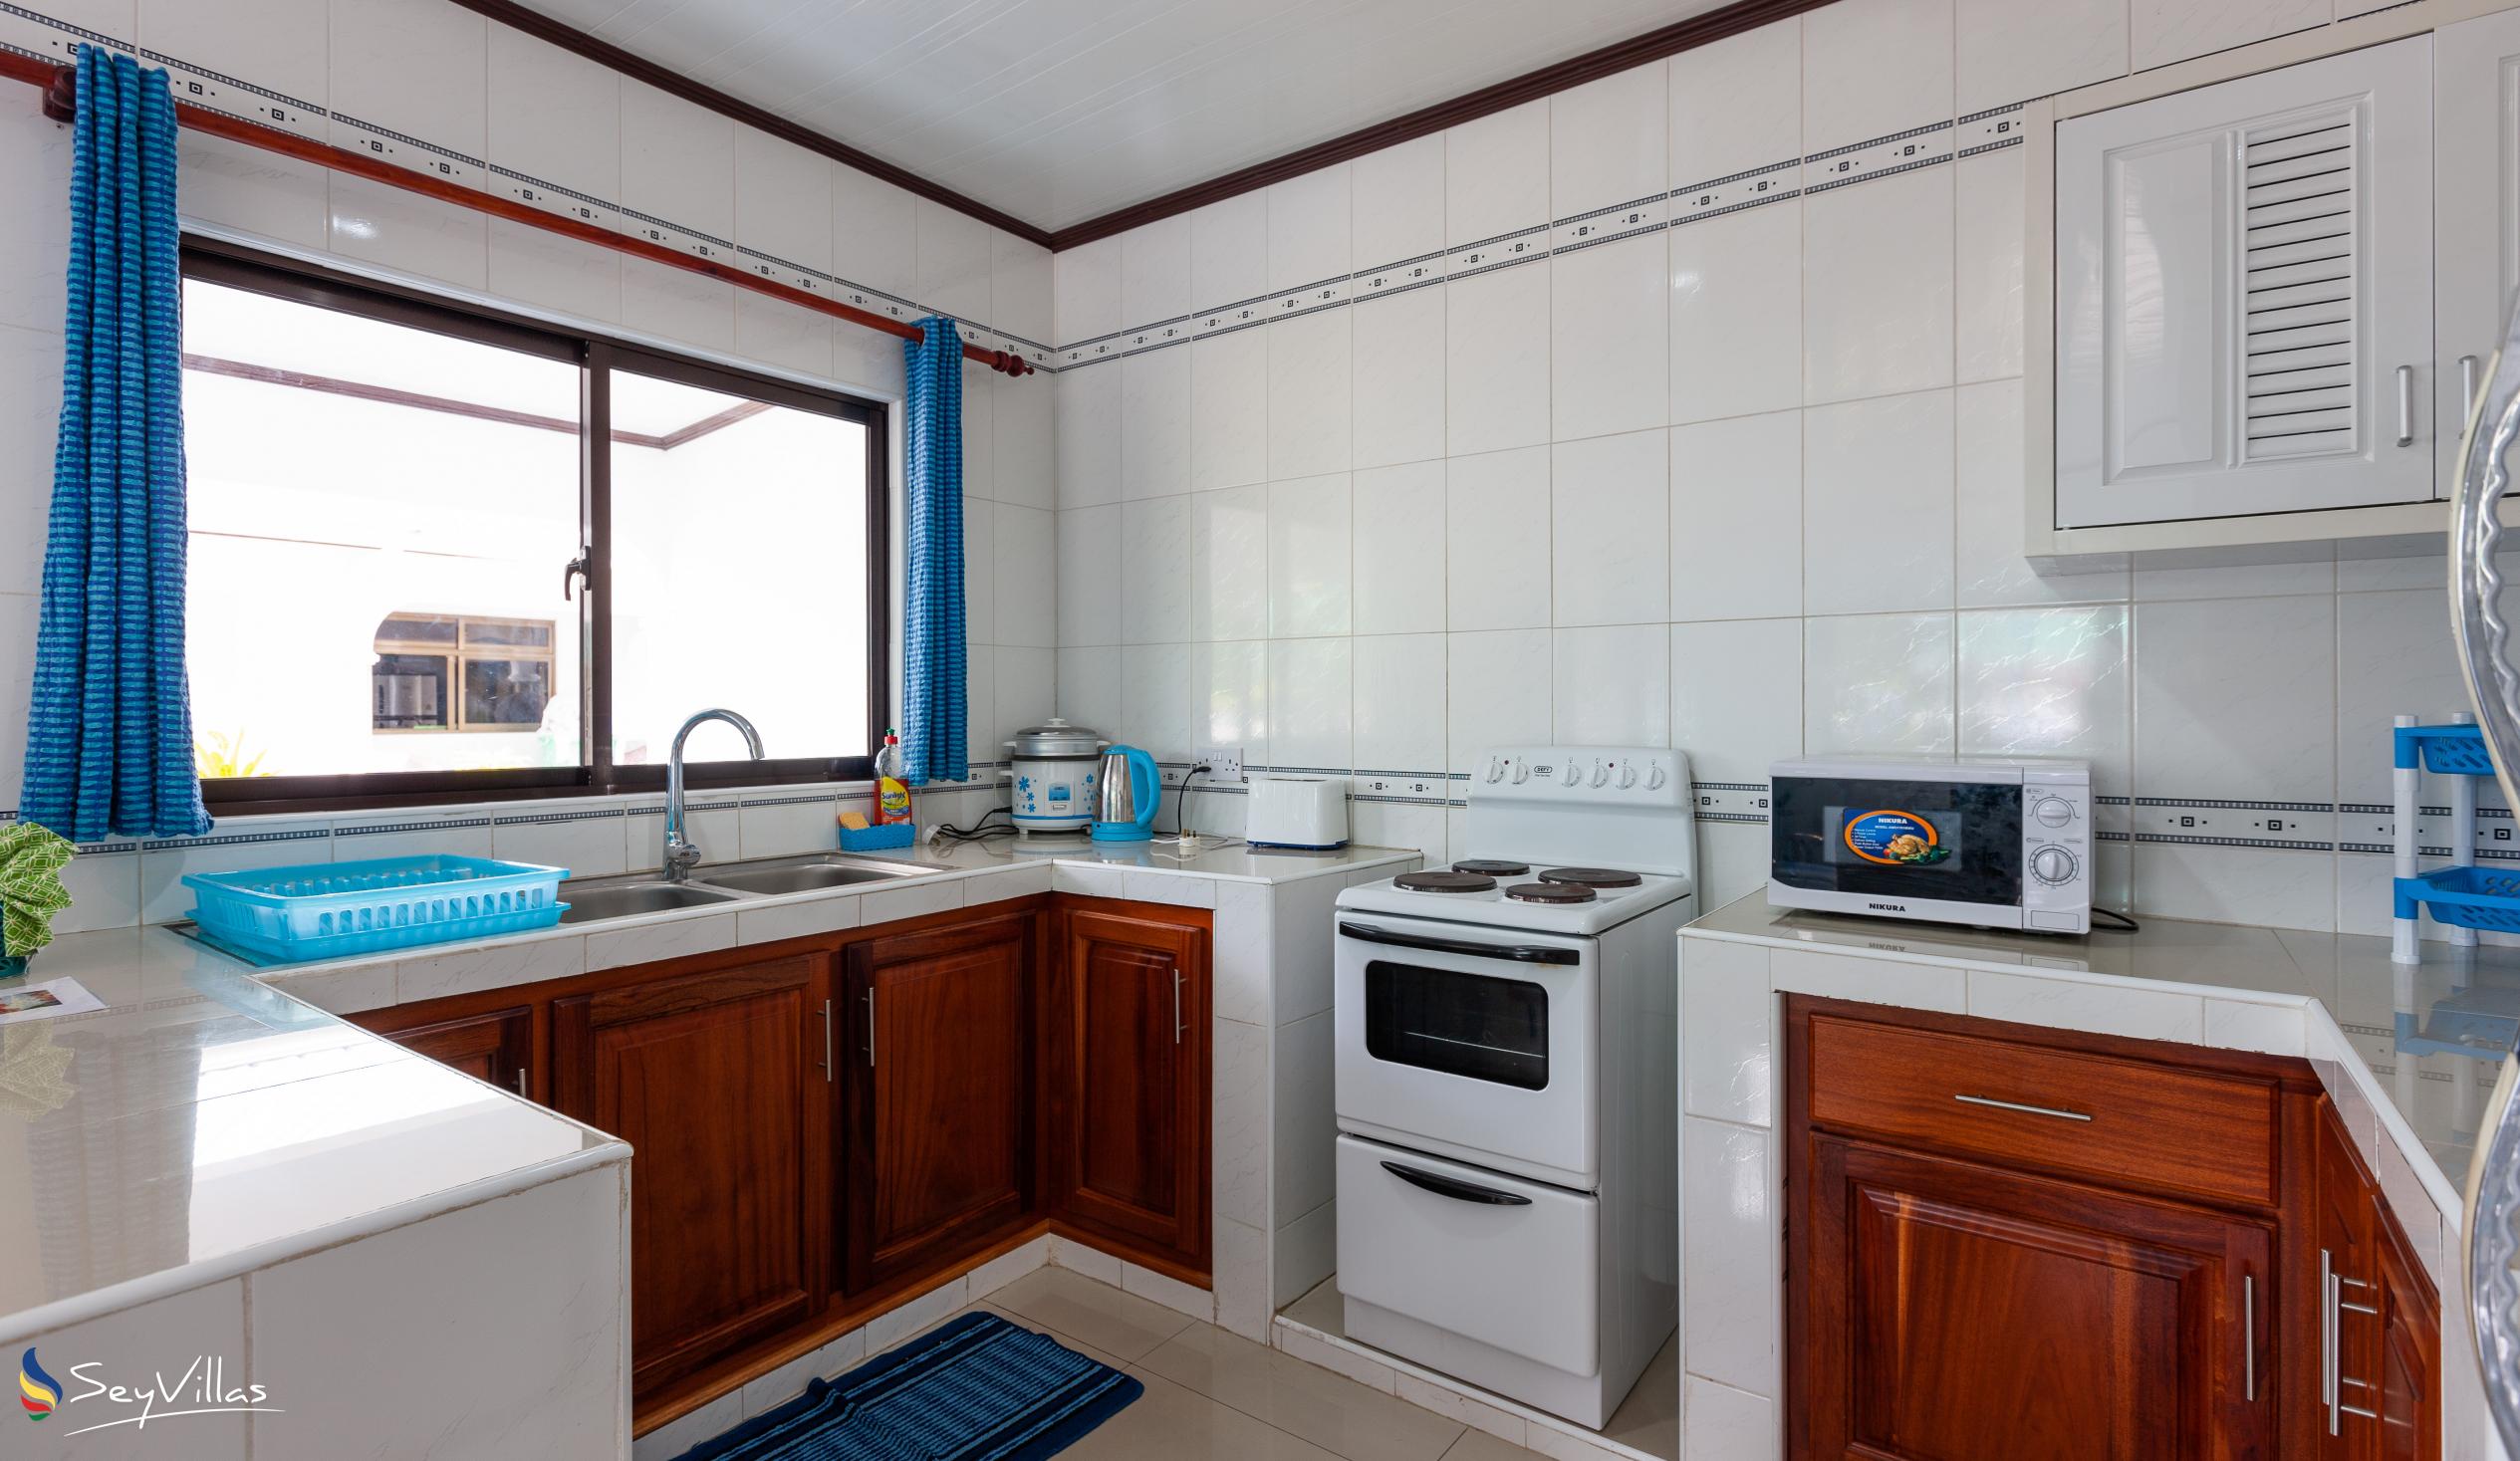 Foto 44: Belle Vacance Self Catering - Appartamento con 1 camera - Praslin (Seychelles)